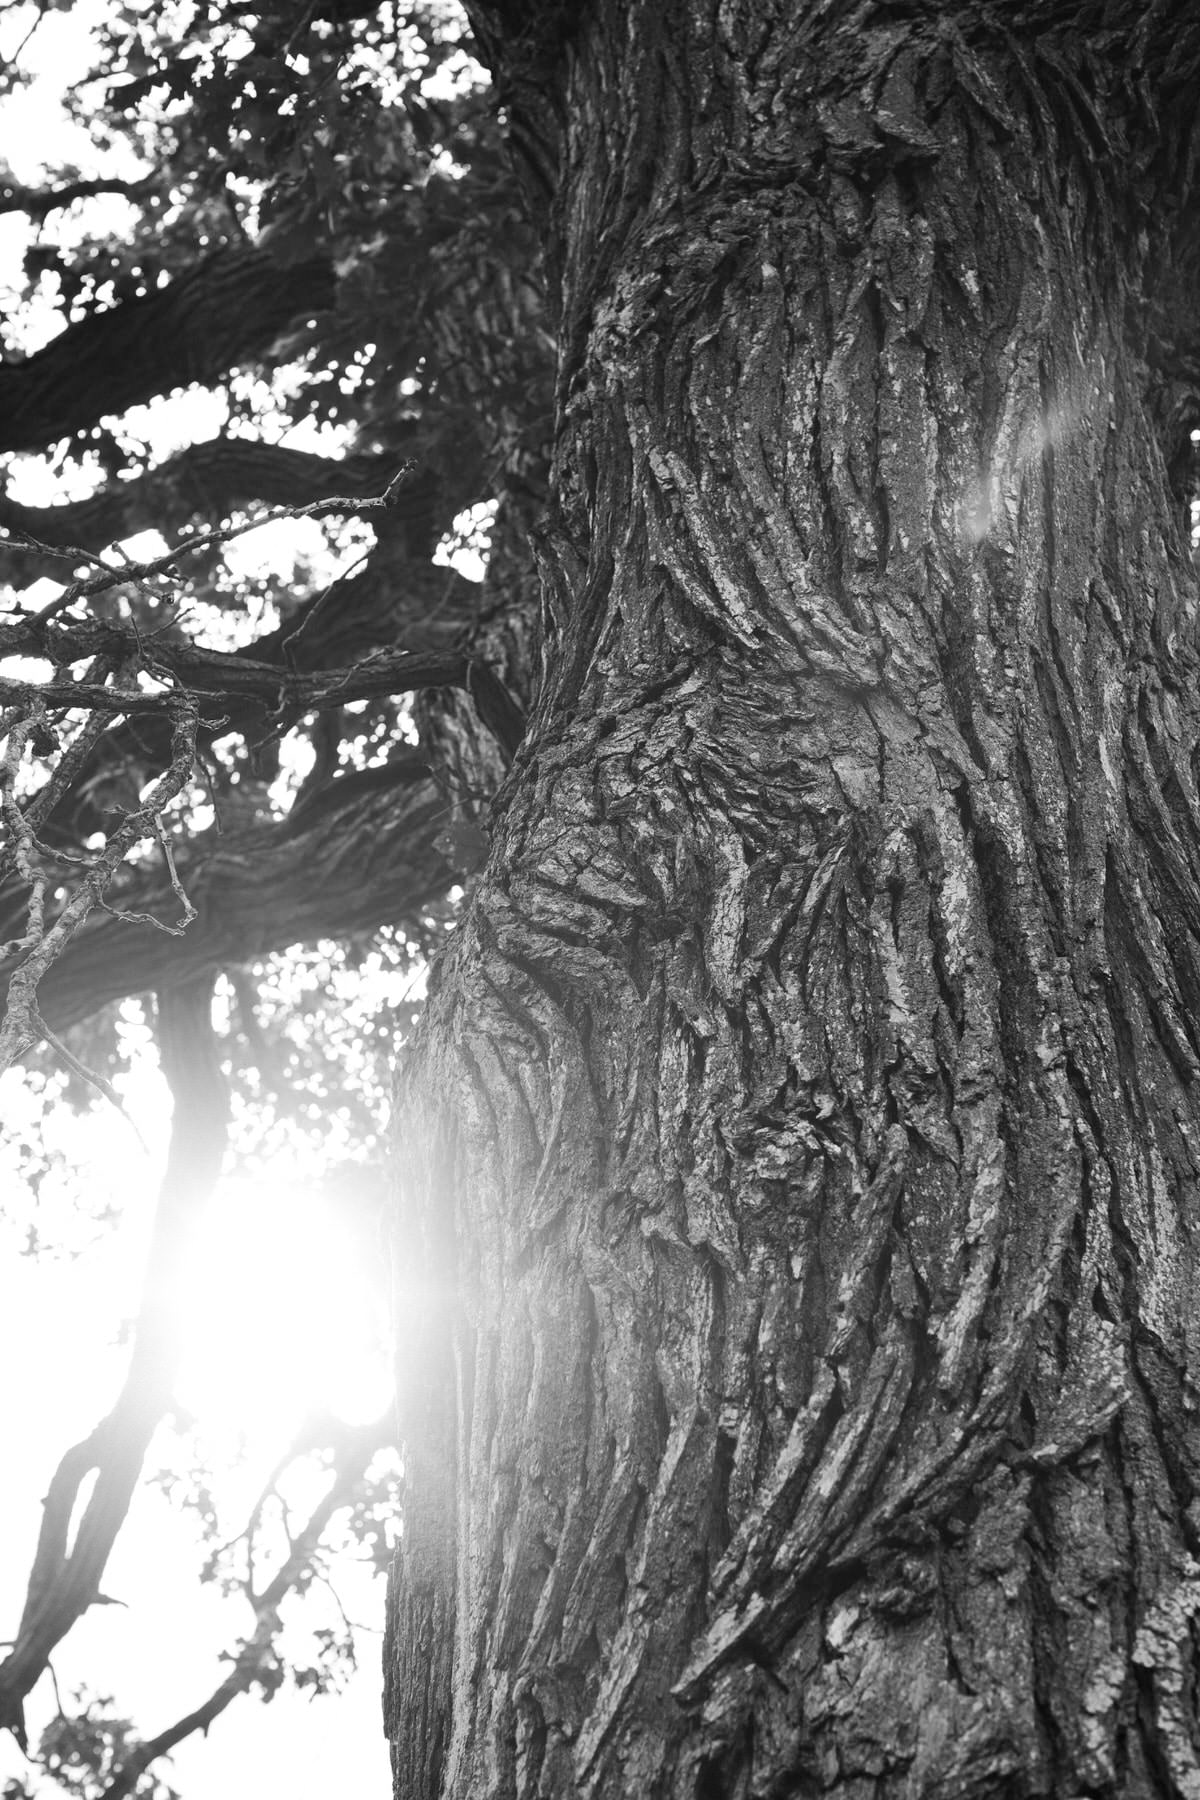 Oak-Tree-Fond-du-Lac-Wisconsin-black-and-white-fine-art-photography-by-Studio-L-photographer-Laura-Schneider-_12045